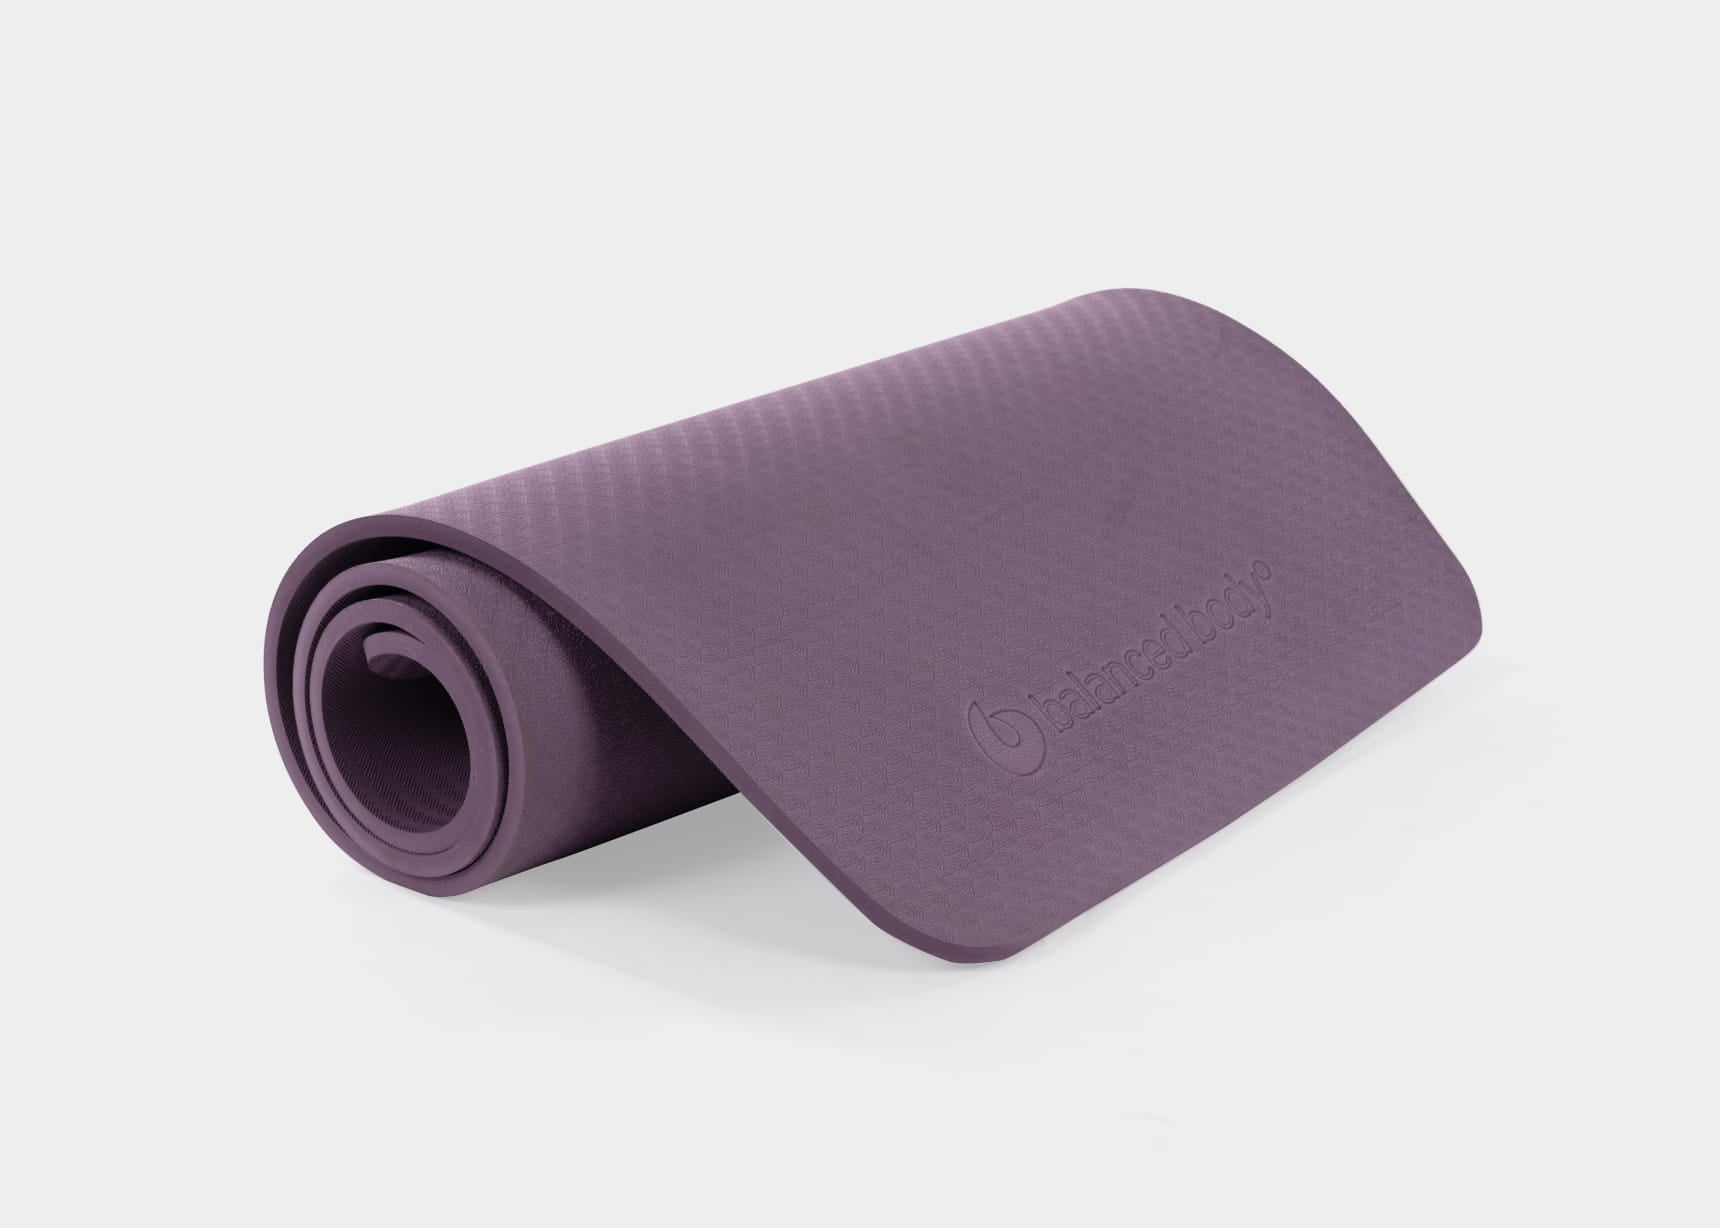 Non Toxic Yoga Mat - Sustainable Yoga Mat - Ecowise Pilates Mat